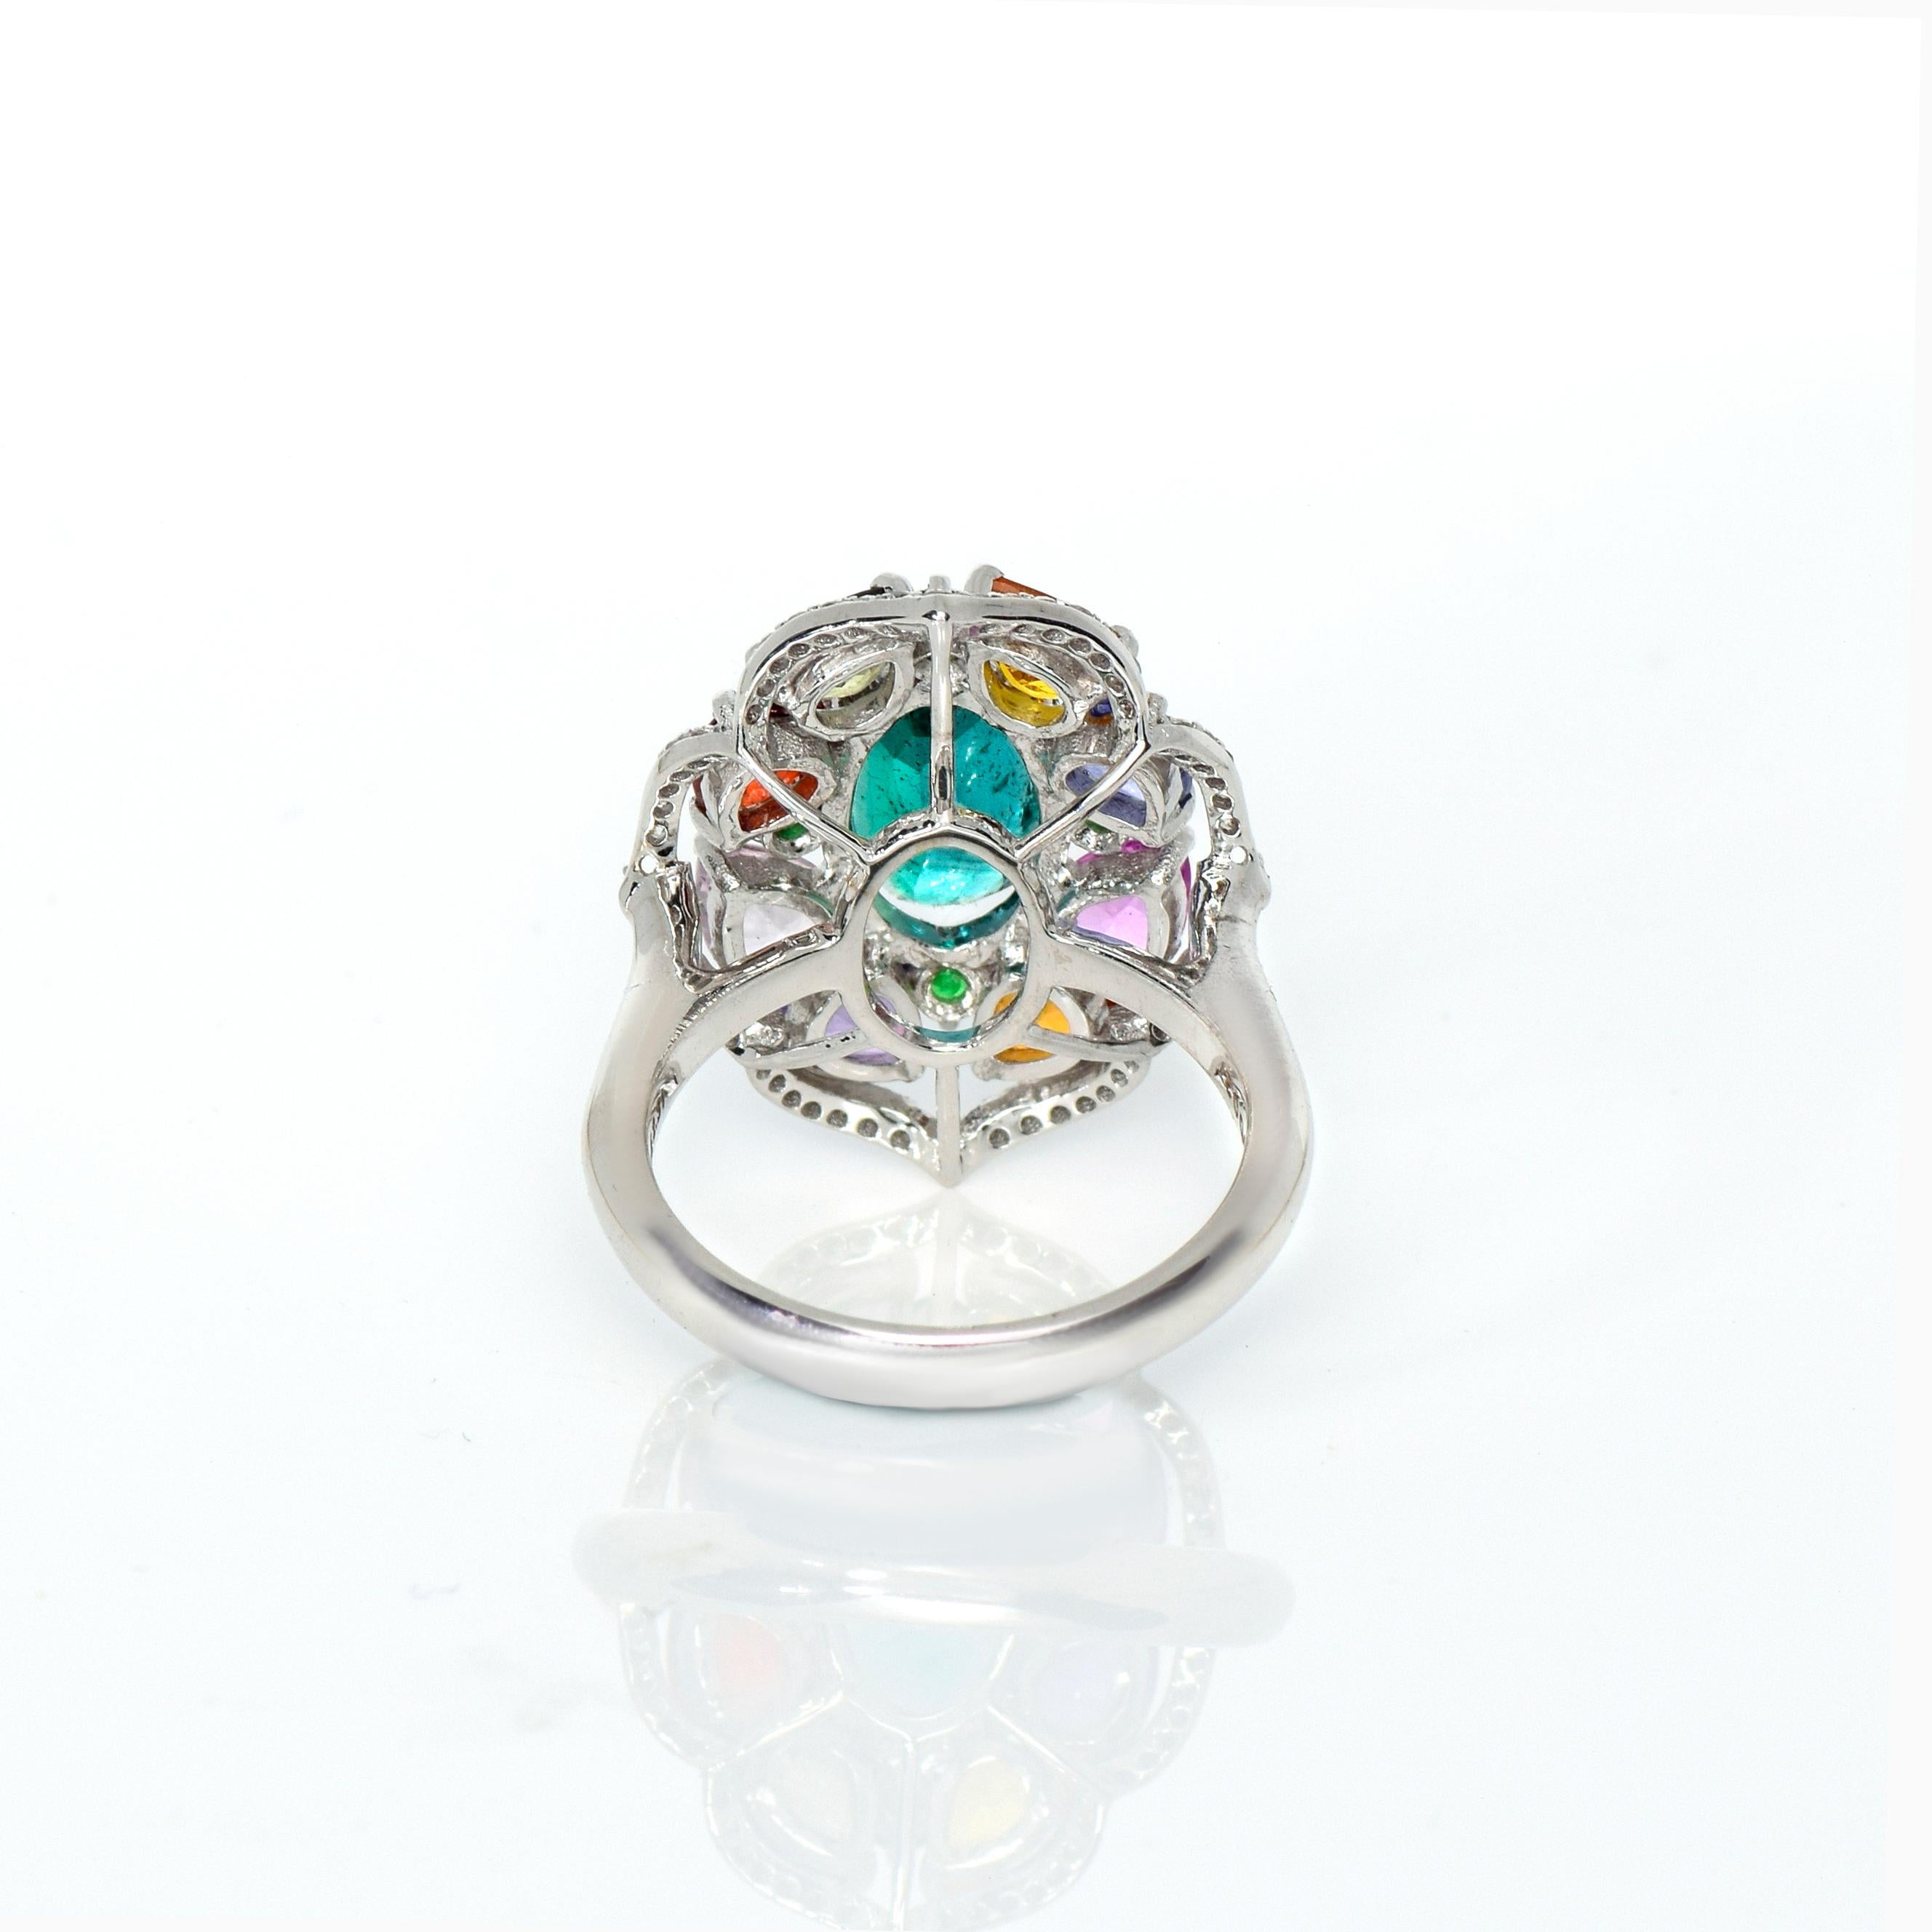 Oval Cut IGI 18K 2.31 Carat Emerald &Sapphires Antique Art Deco Engagement Ring For Sale